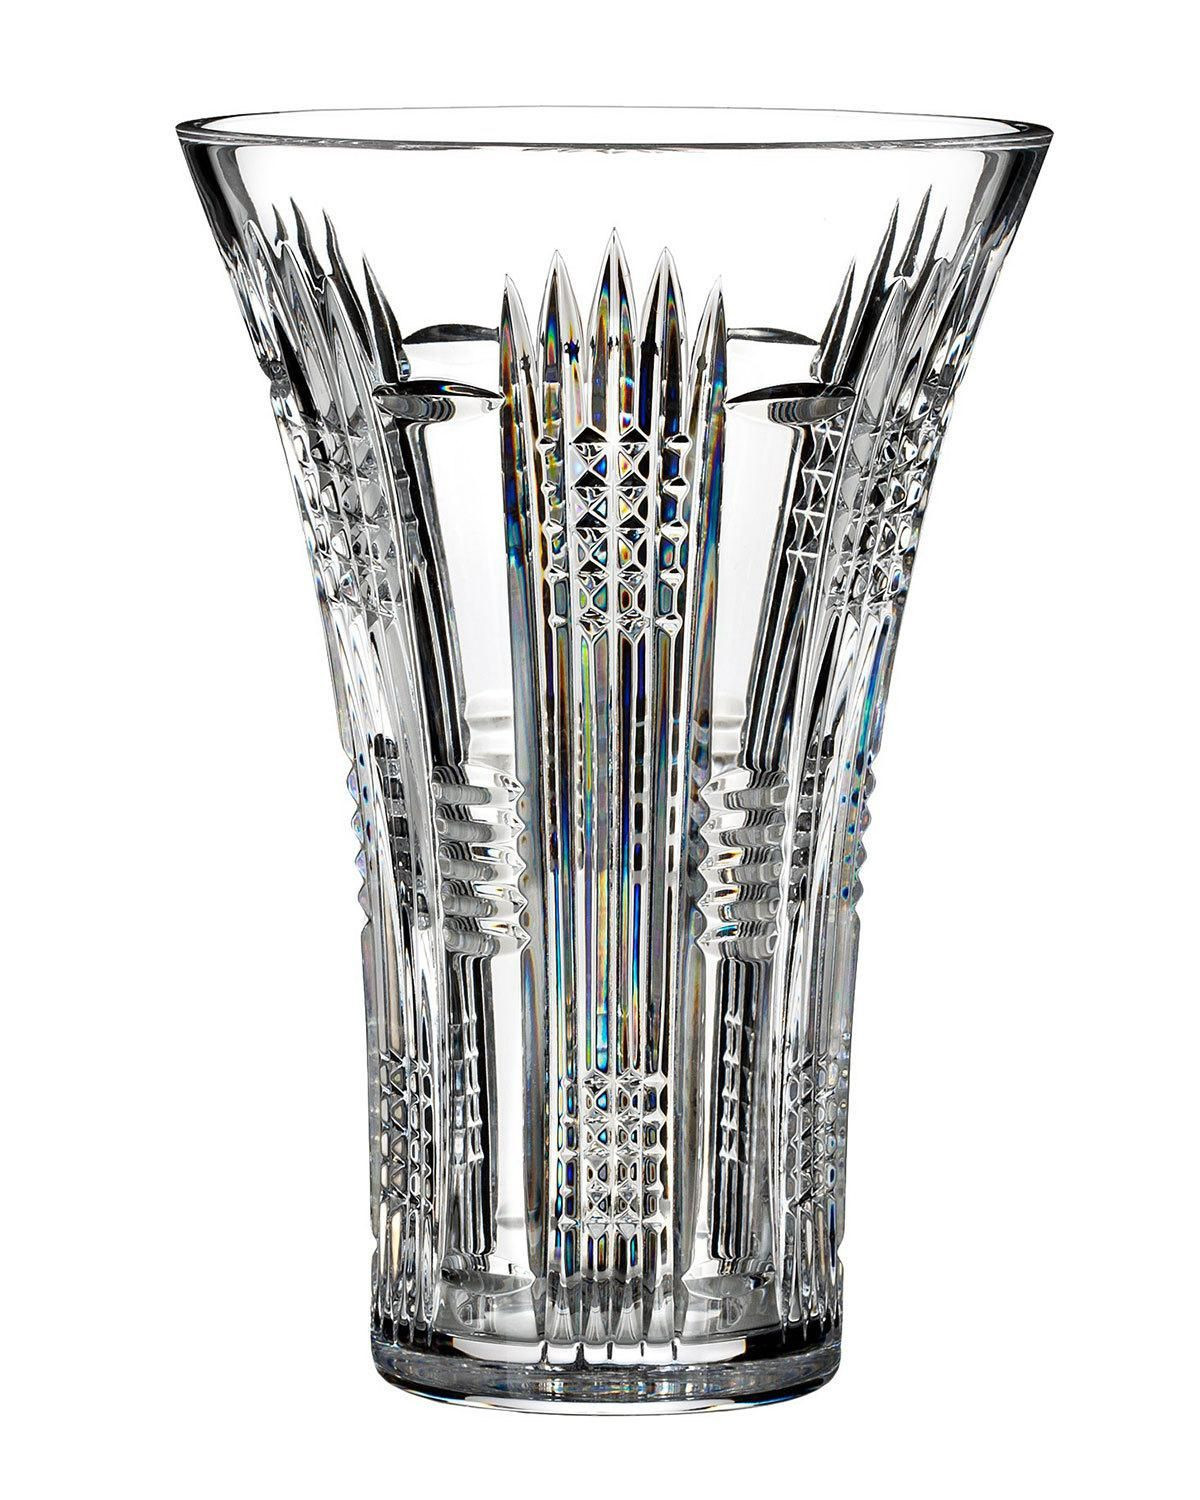 21 Spectacular William Yeoward Crystal Vase 2024 free download william yeoward crystal vase of william yeoward karen conversation vase with dungarven 8 vase